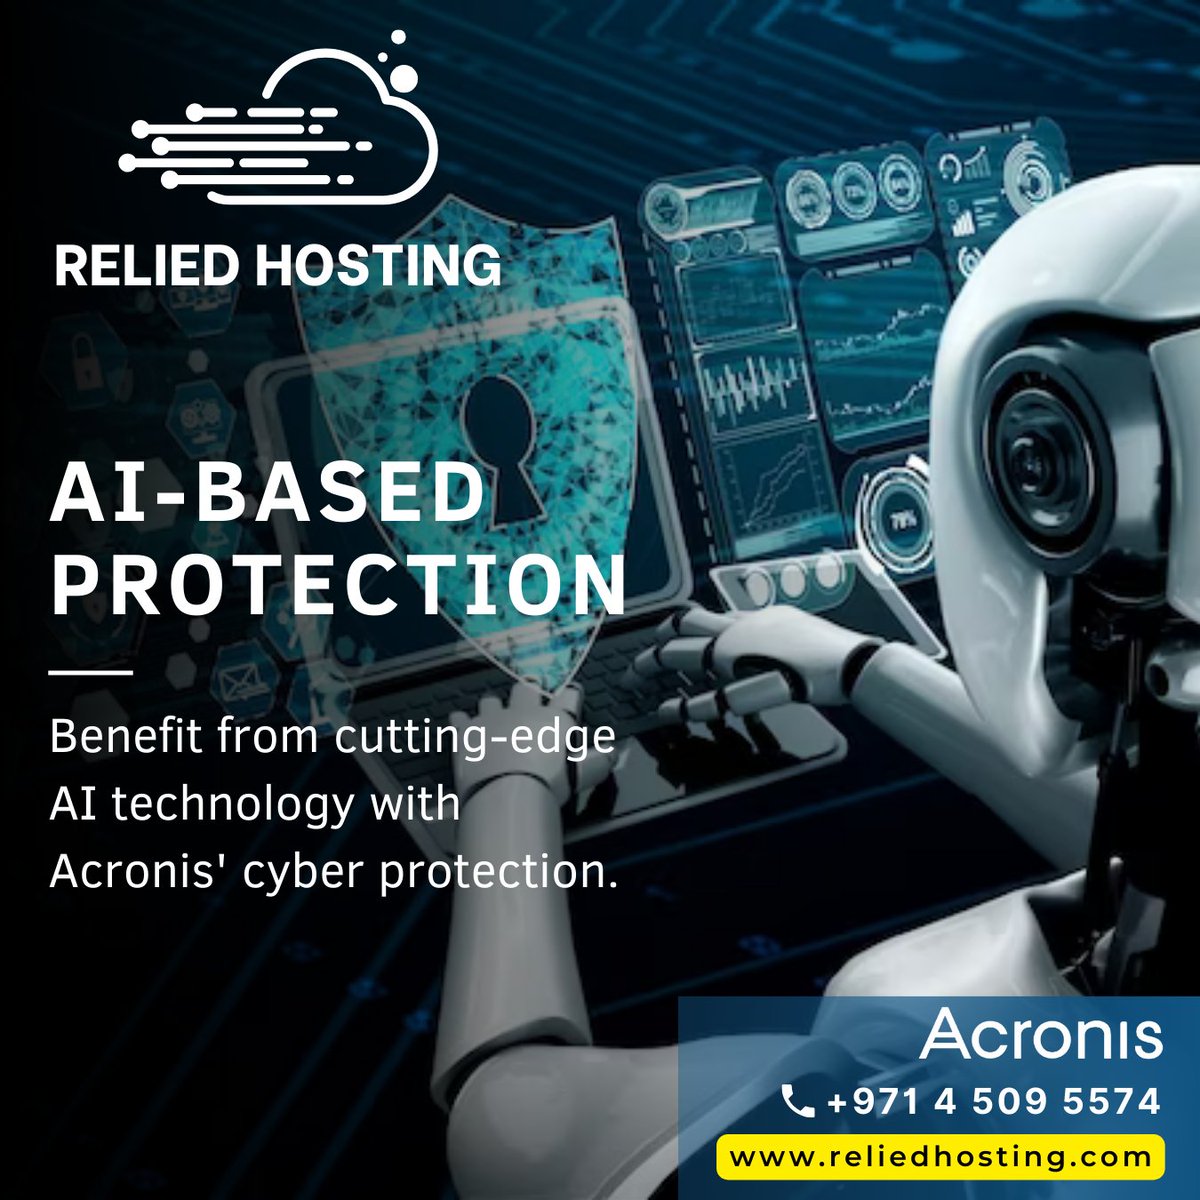 #acronis  AI-Based Protection - Benefit from cutting-edge AI technology with Acronis' cyber protection.
dubai, abu dhabi, sharjah, UAE

smpl.is/8mw8j
#etronics #etronicsuae #b2c #businessdubai #startupdubai